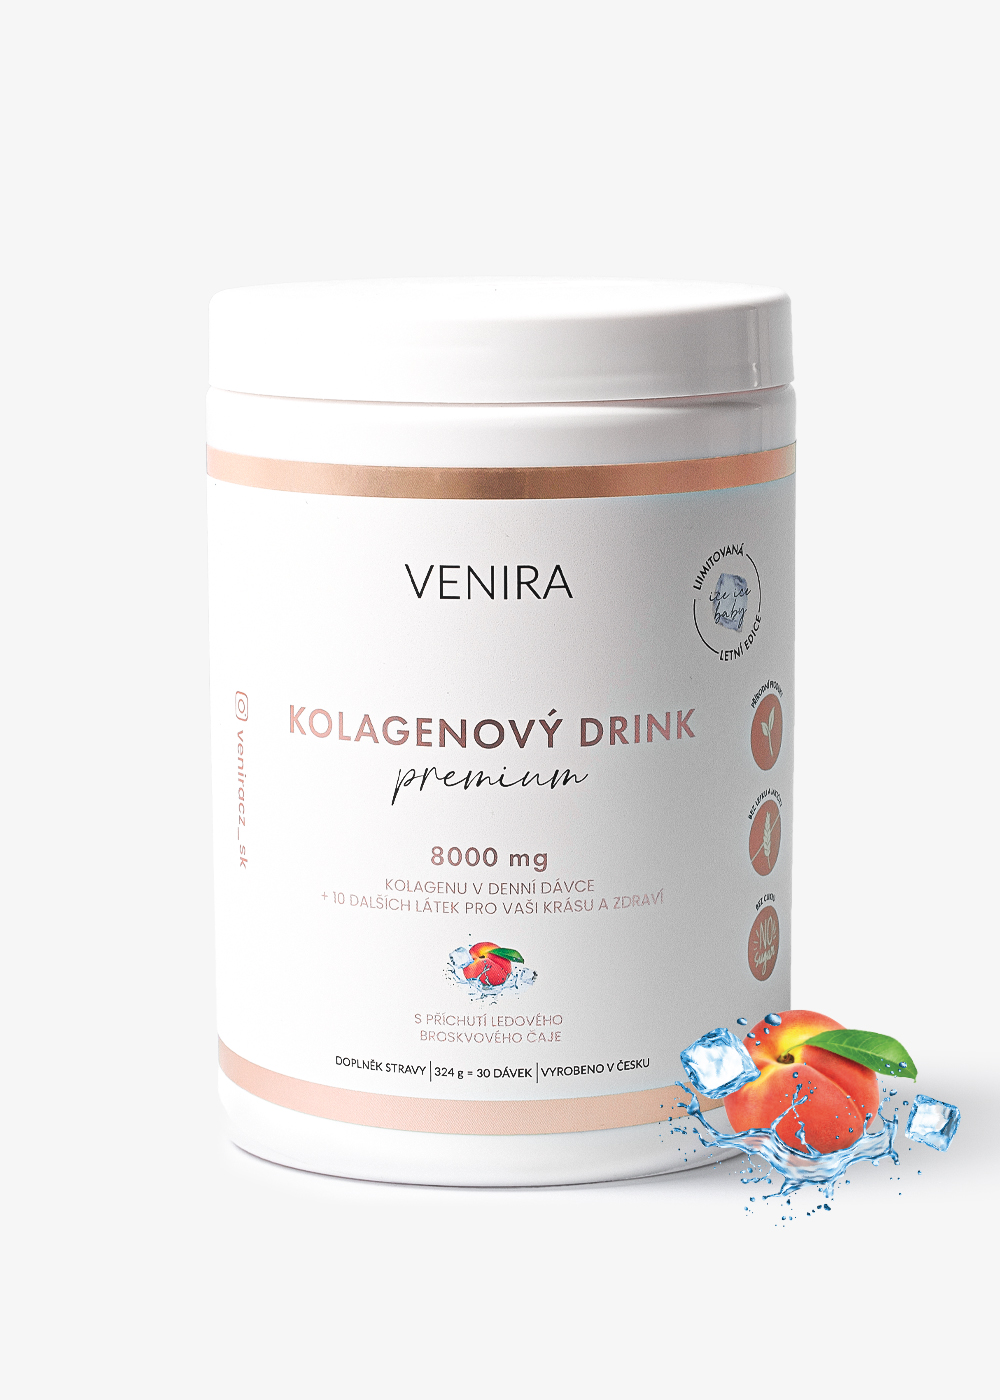 VENIRA PREMIUM kolagenový drink pro vlasy, nehty a pleť - limitovaná letní edice, ledový broskvový čaj, 324 g